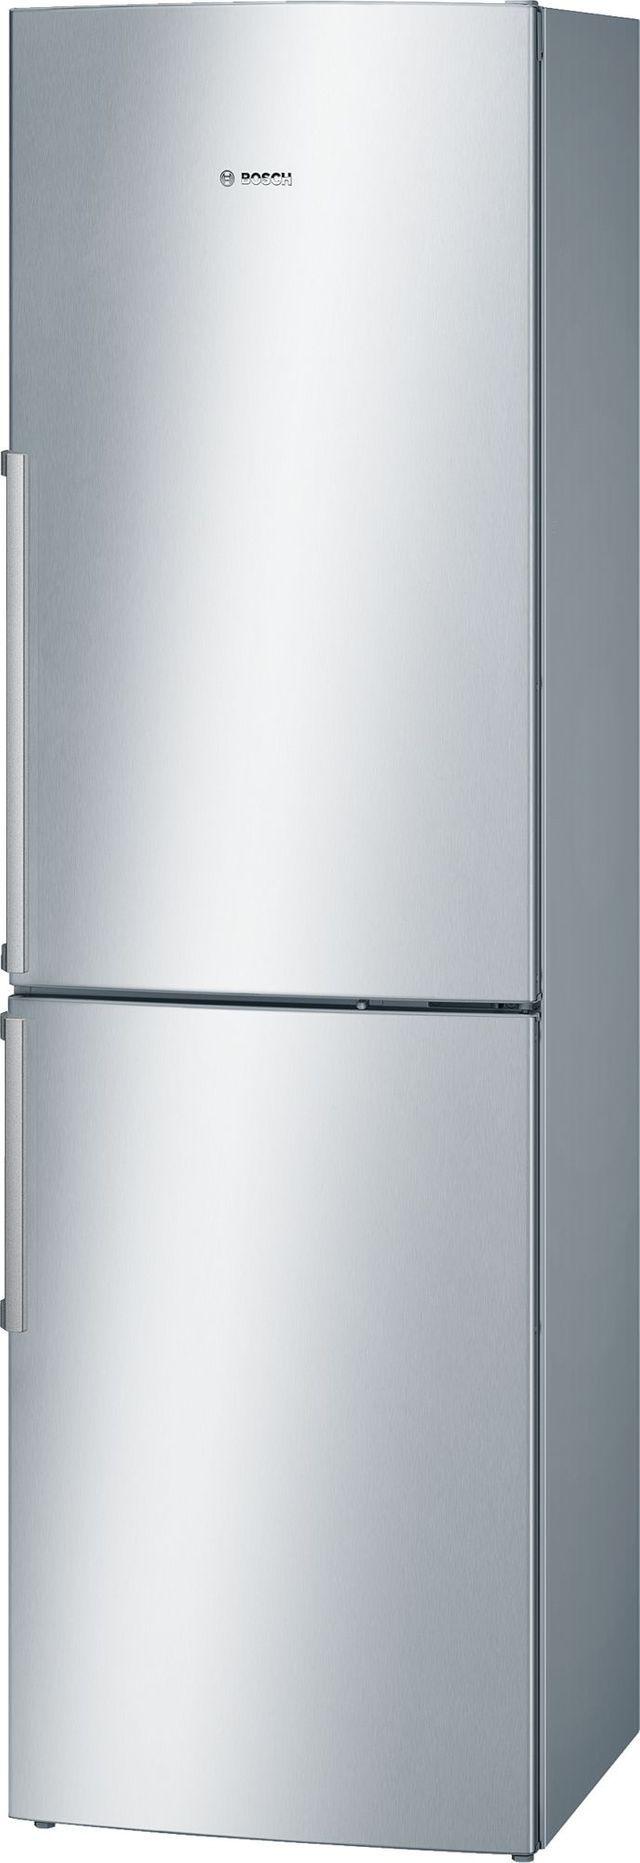 Bosch 800 Series 11.0 Cu. Ft. Stainless Steel Counter-Depth Bottom Freezer Refrigerator 1